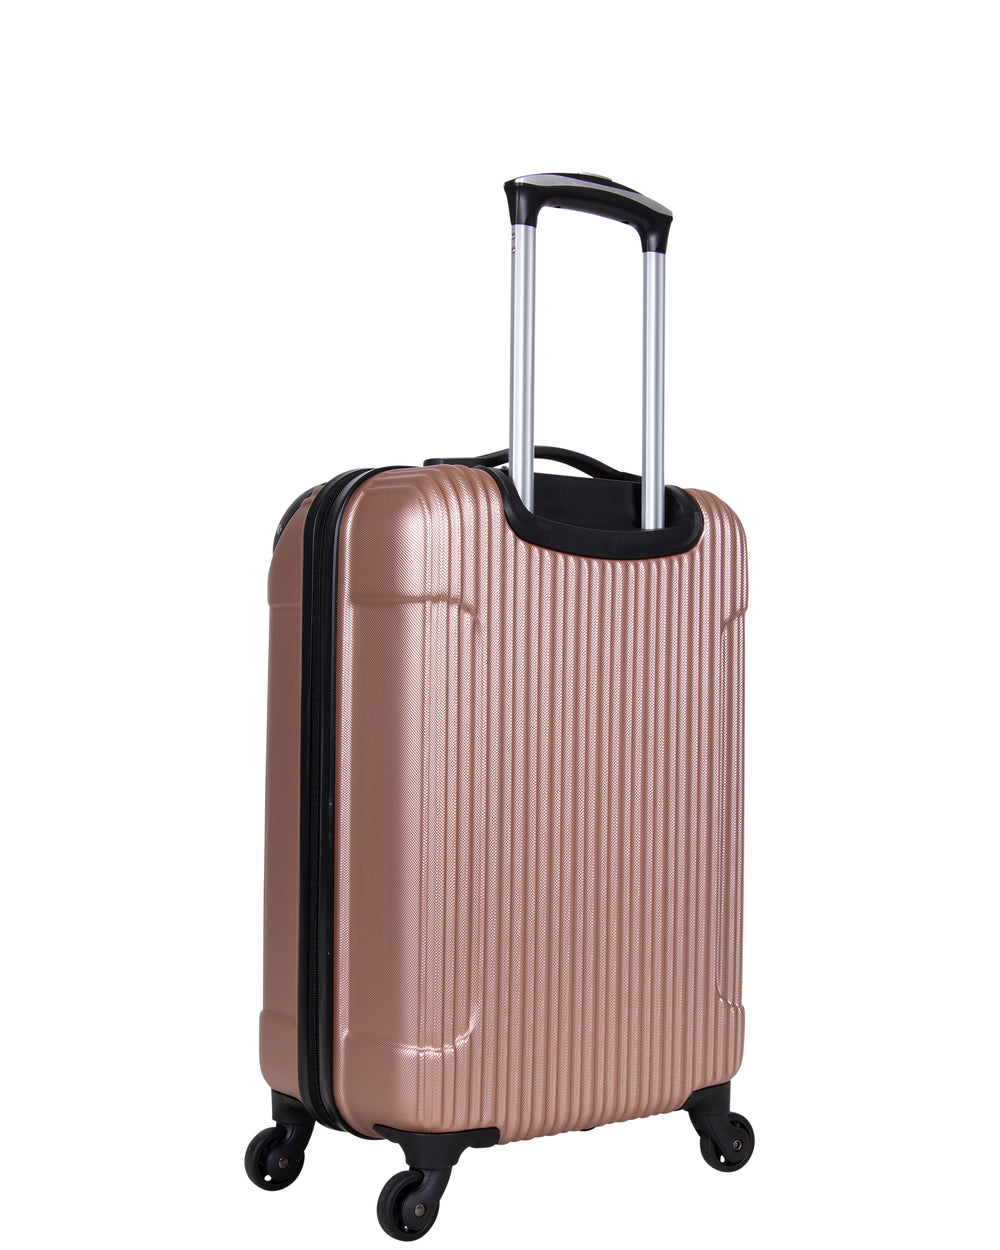 Charlton Bay 2-Piece Lightweight Hardside Luggage Set - Rose Gold